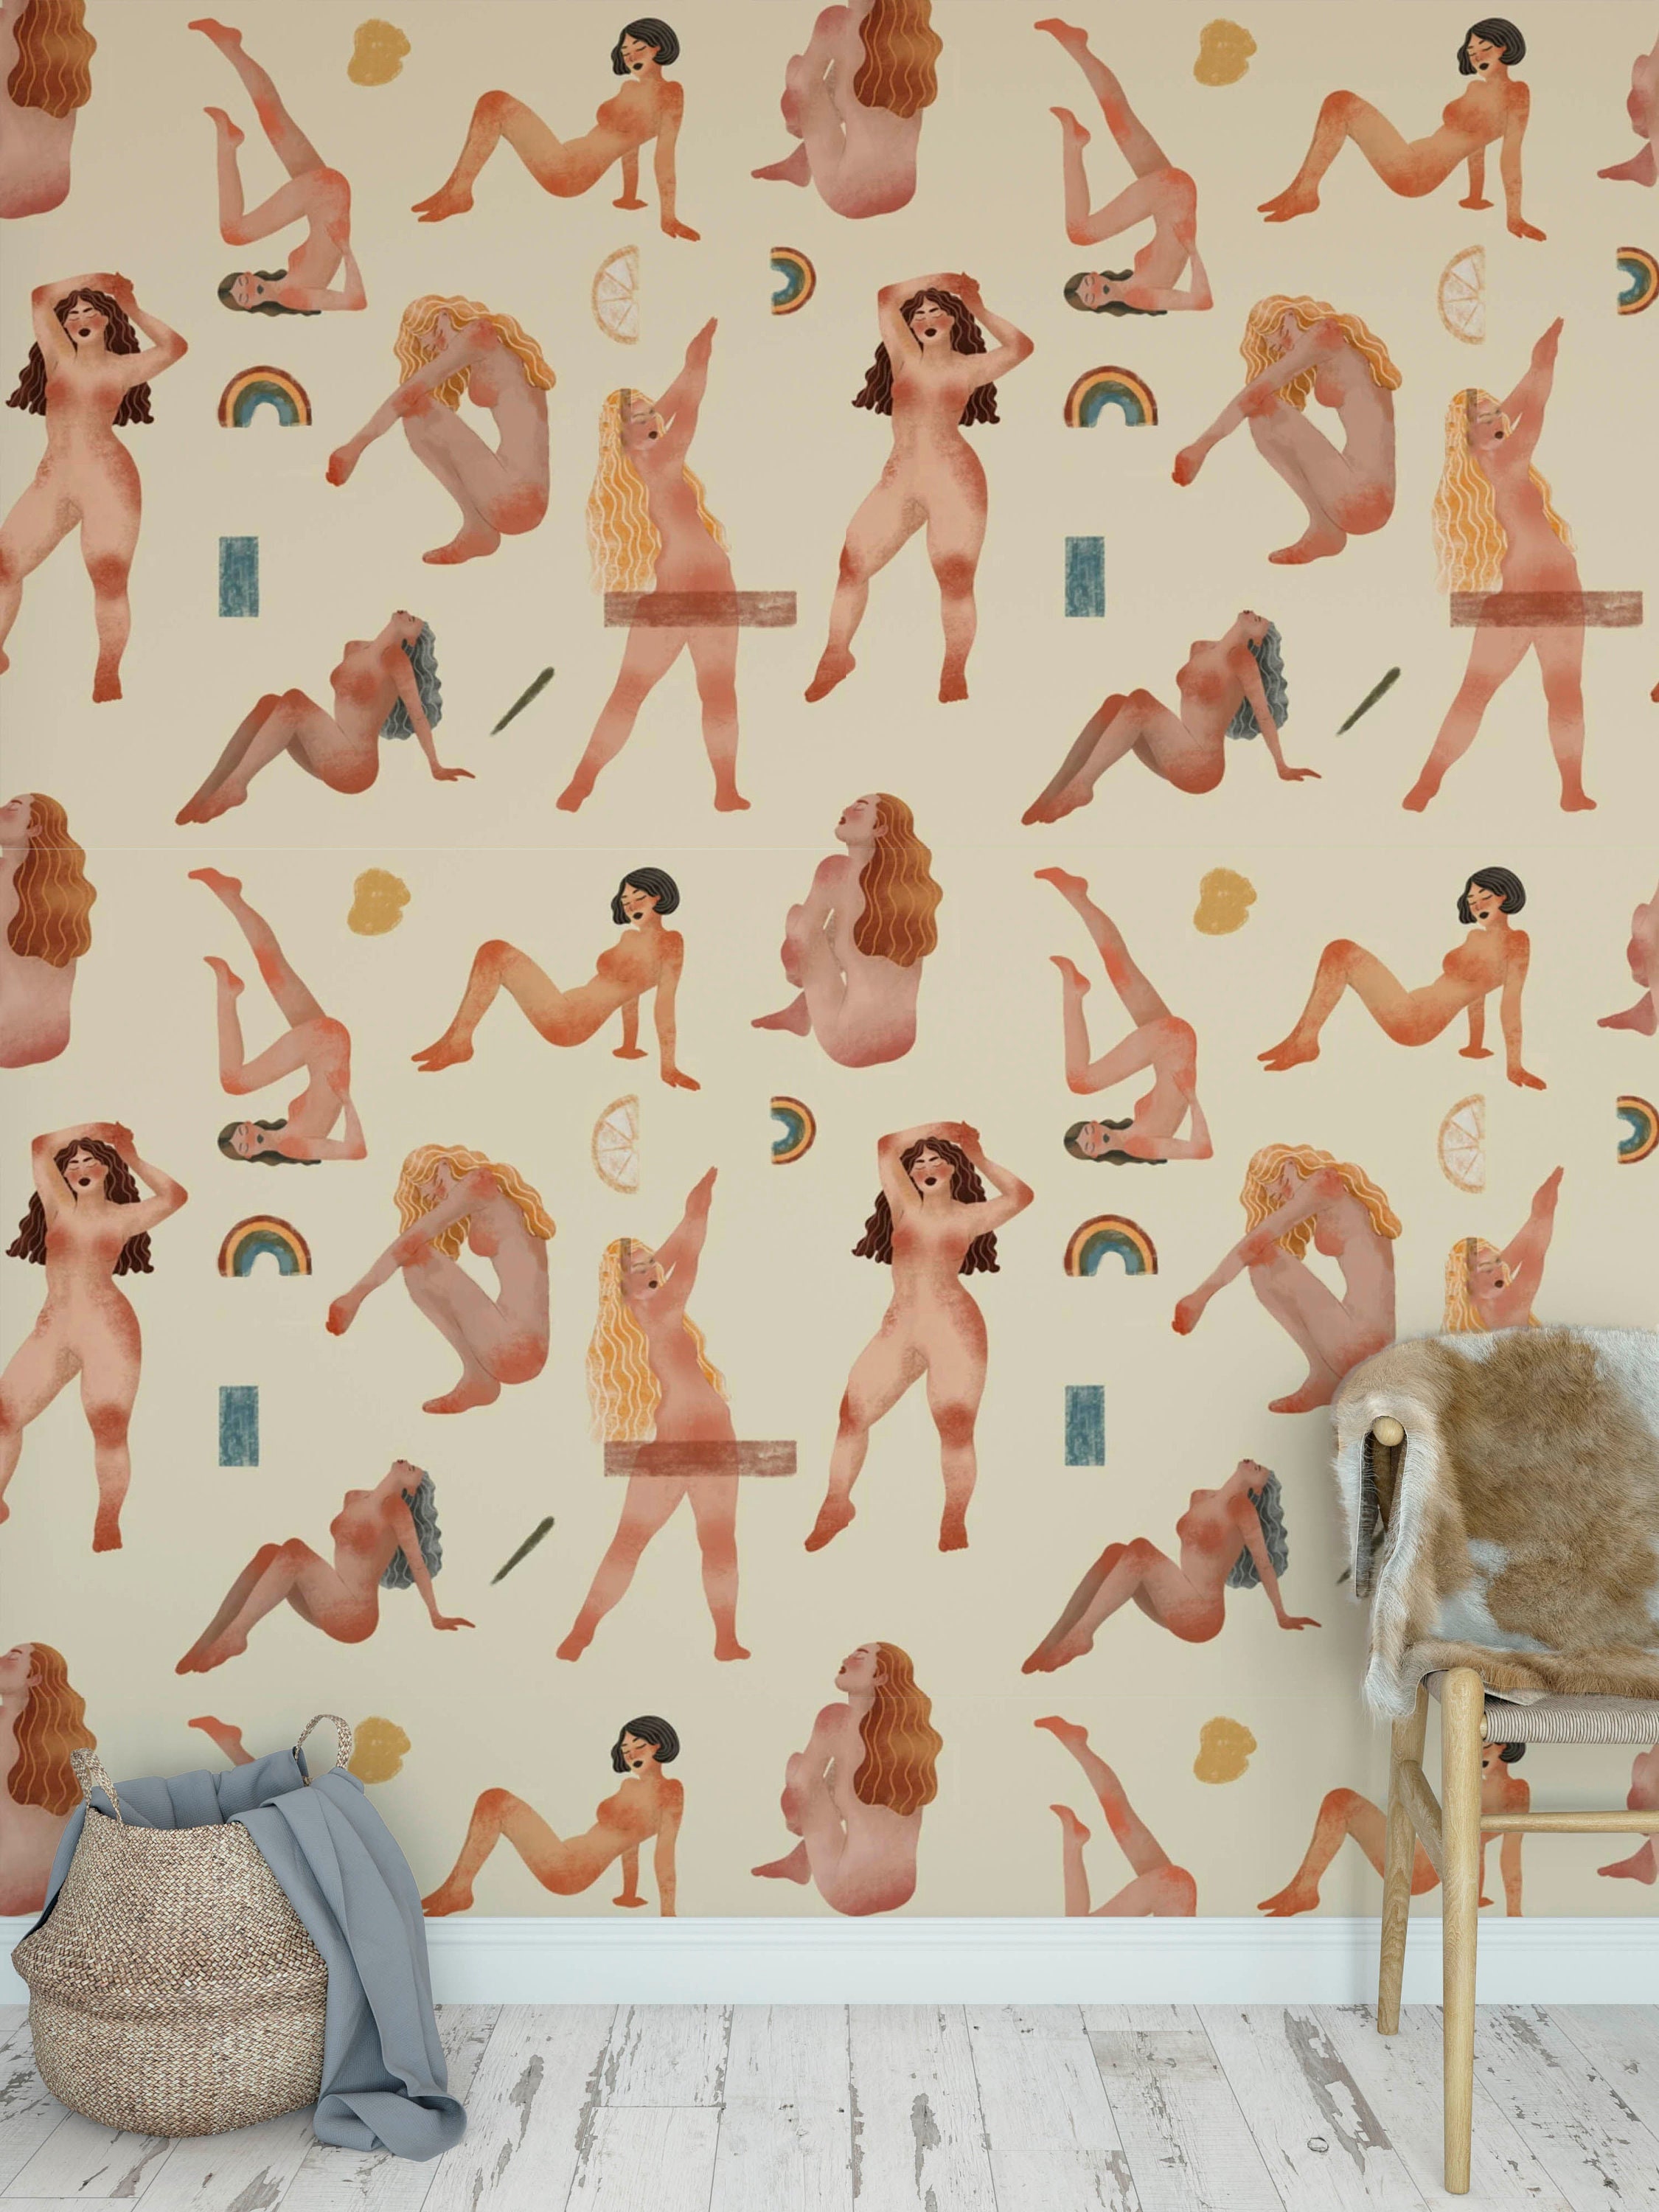 Naked people wallpaper